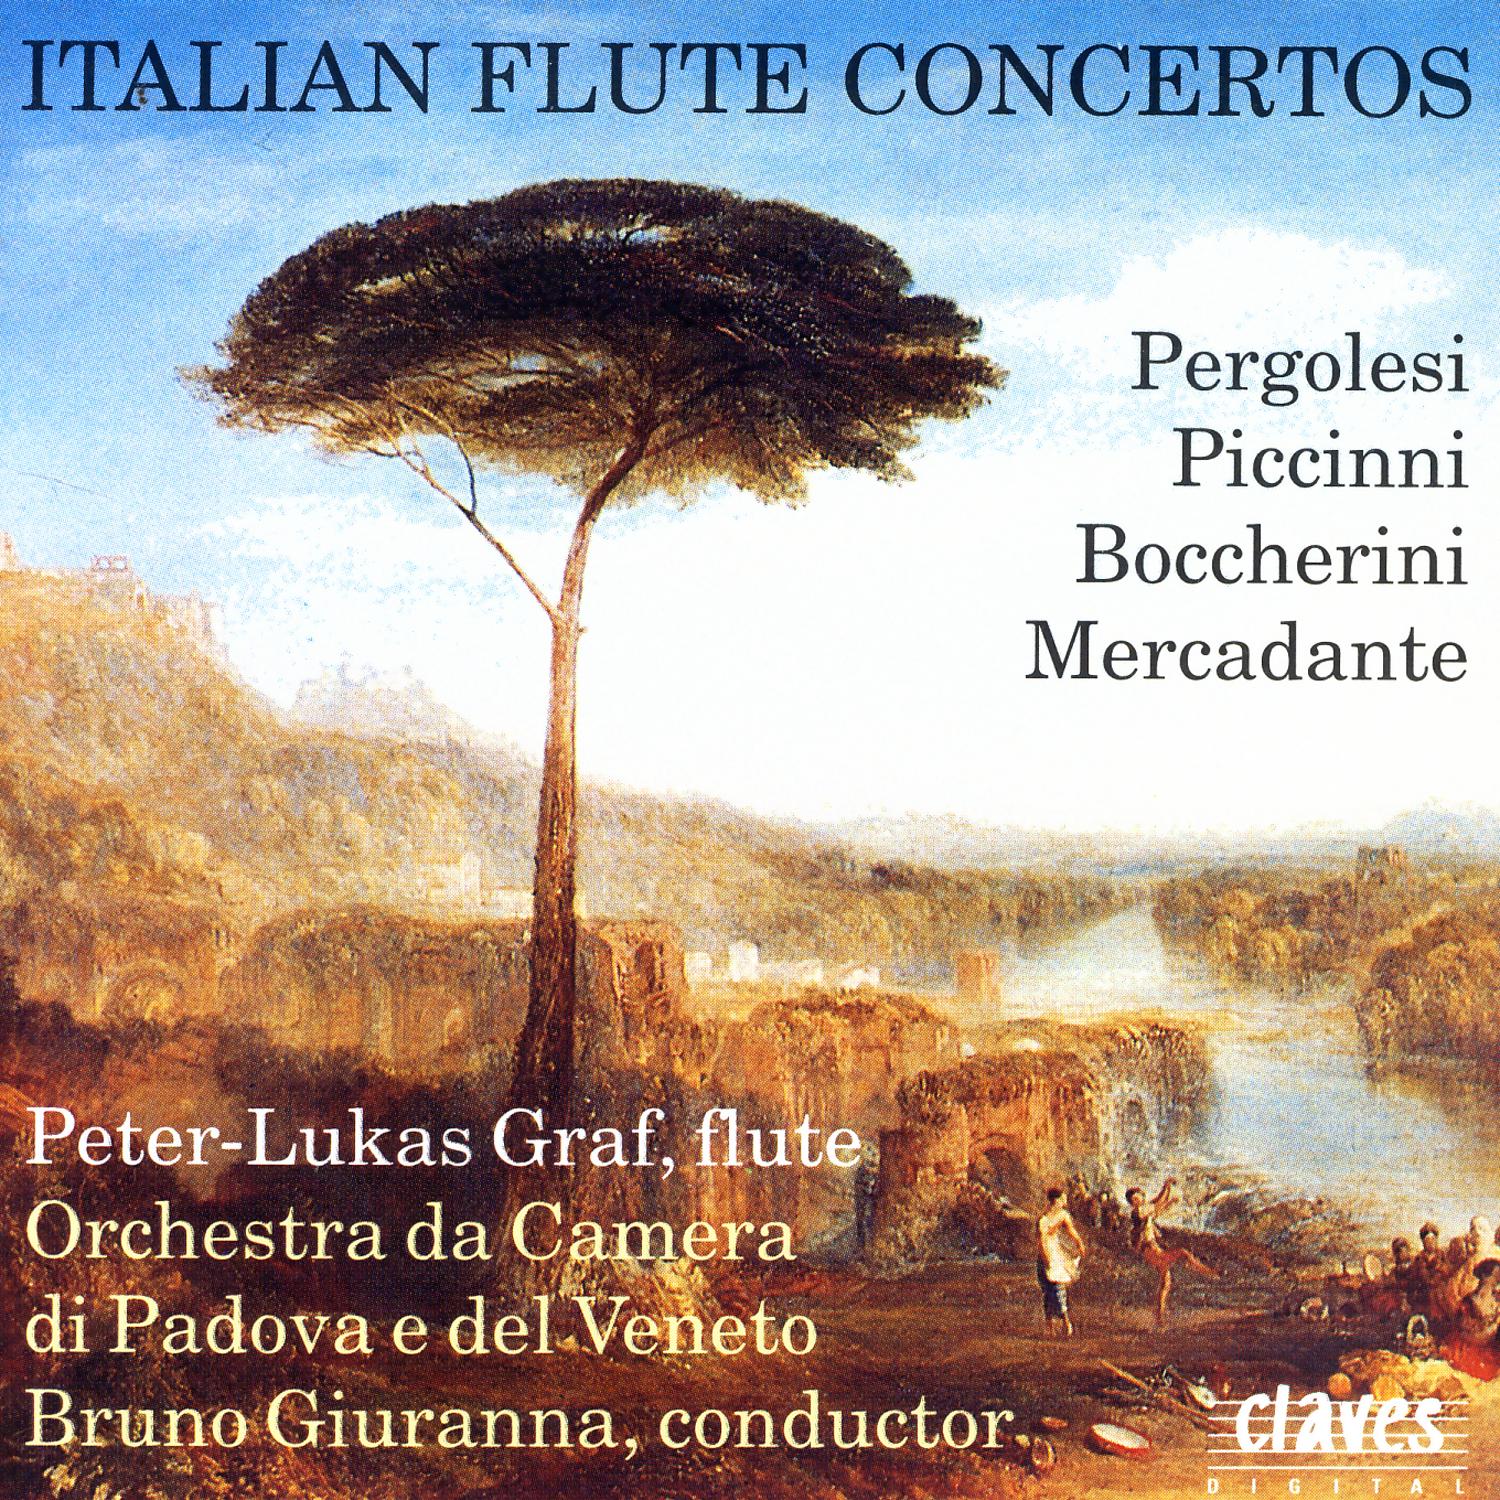 Flute Concerto in G Major: III. Allegro spiritoso